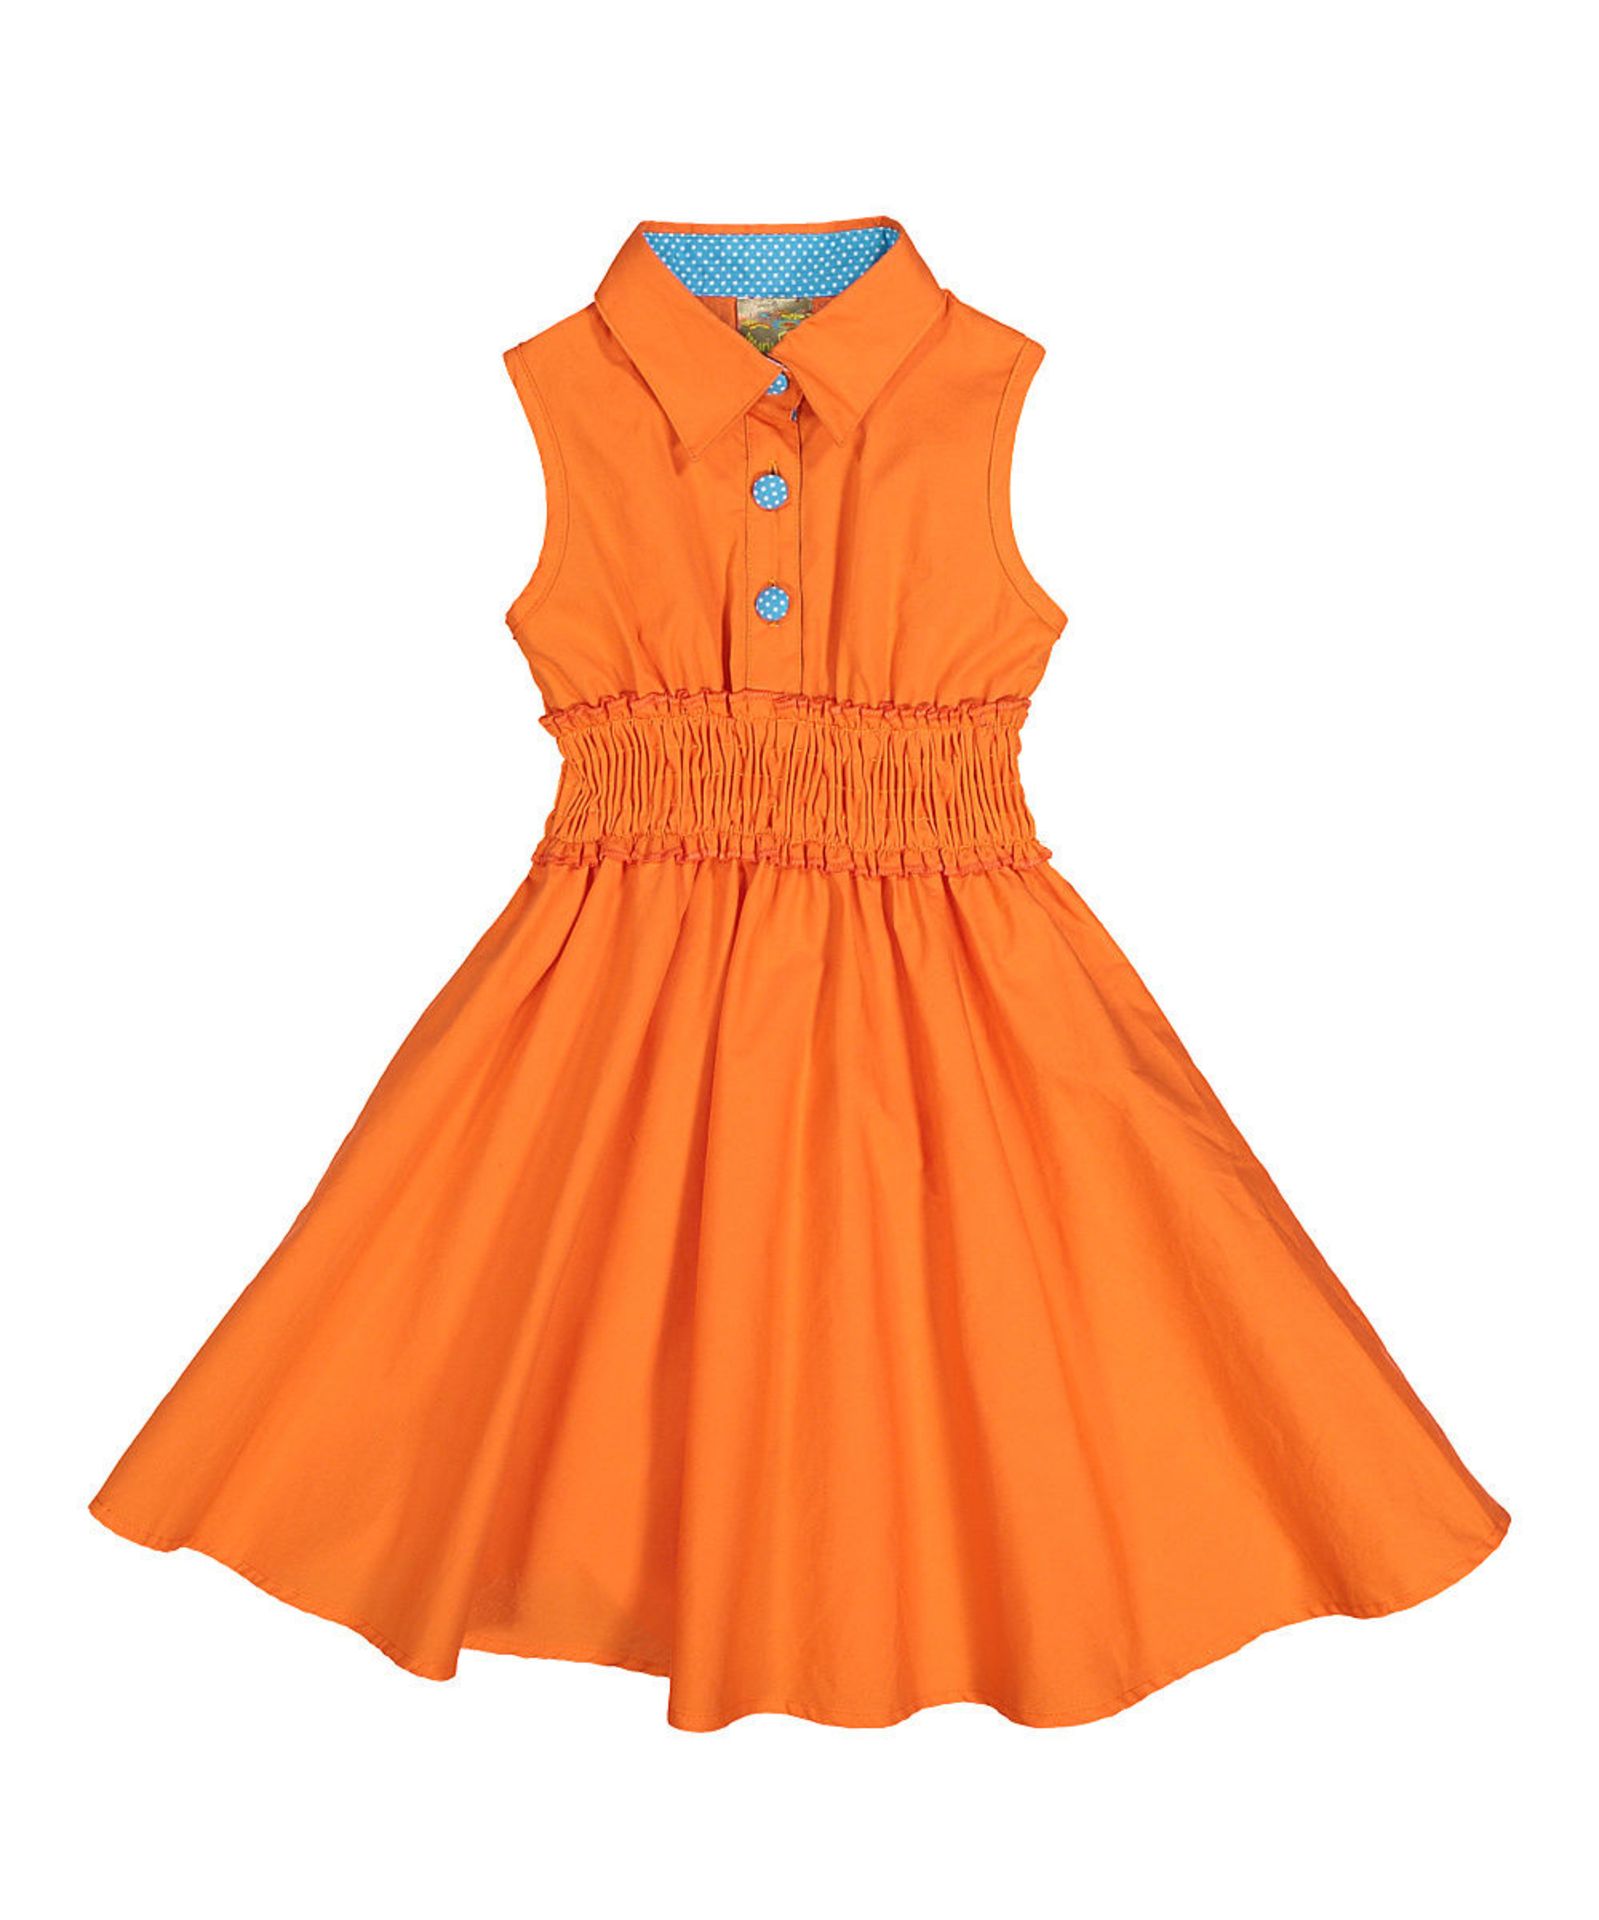 Maria Elena Orange & Blue Sleeveless Dress (Age 7-8 yrs) (New with tags) [Ref: 37893535- T-69]